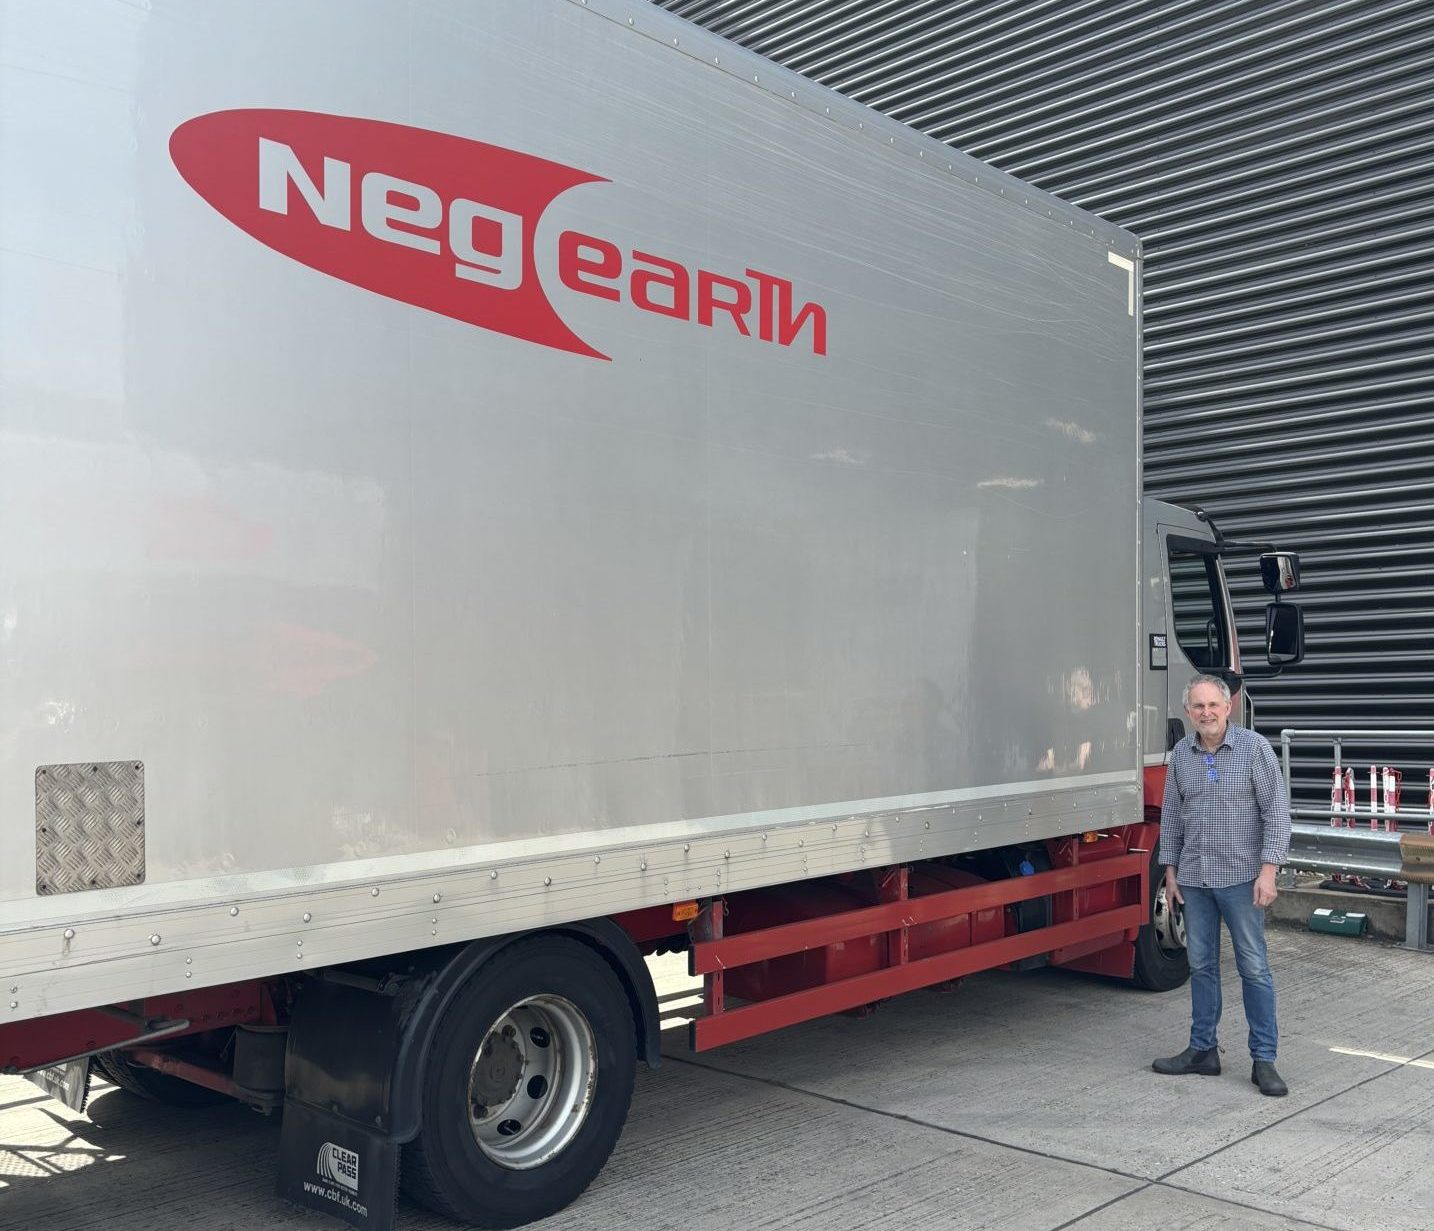 Neg Earth Donates Truck to British Ukrainian Aid